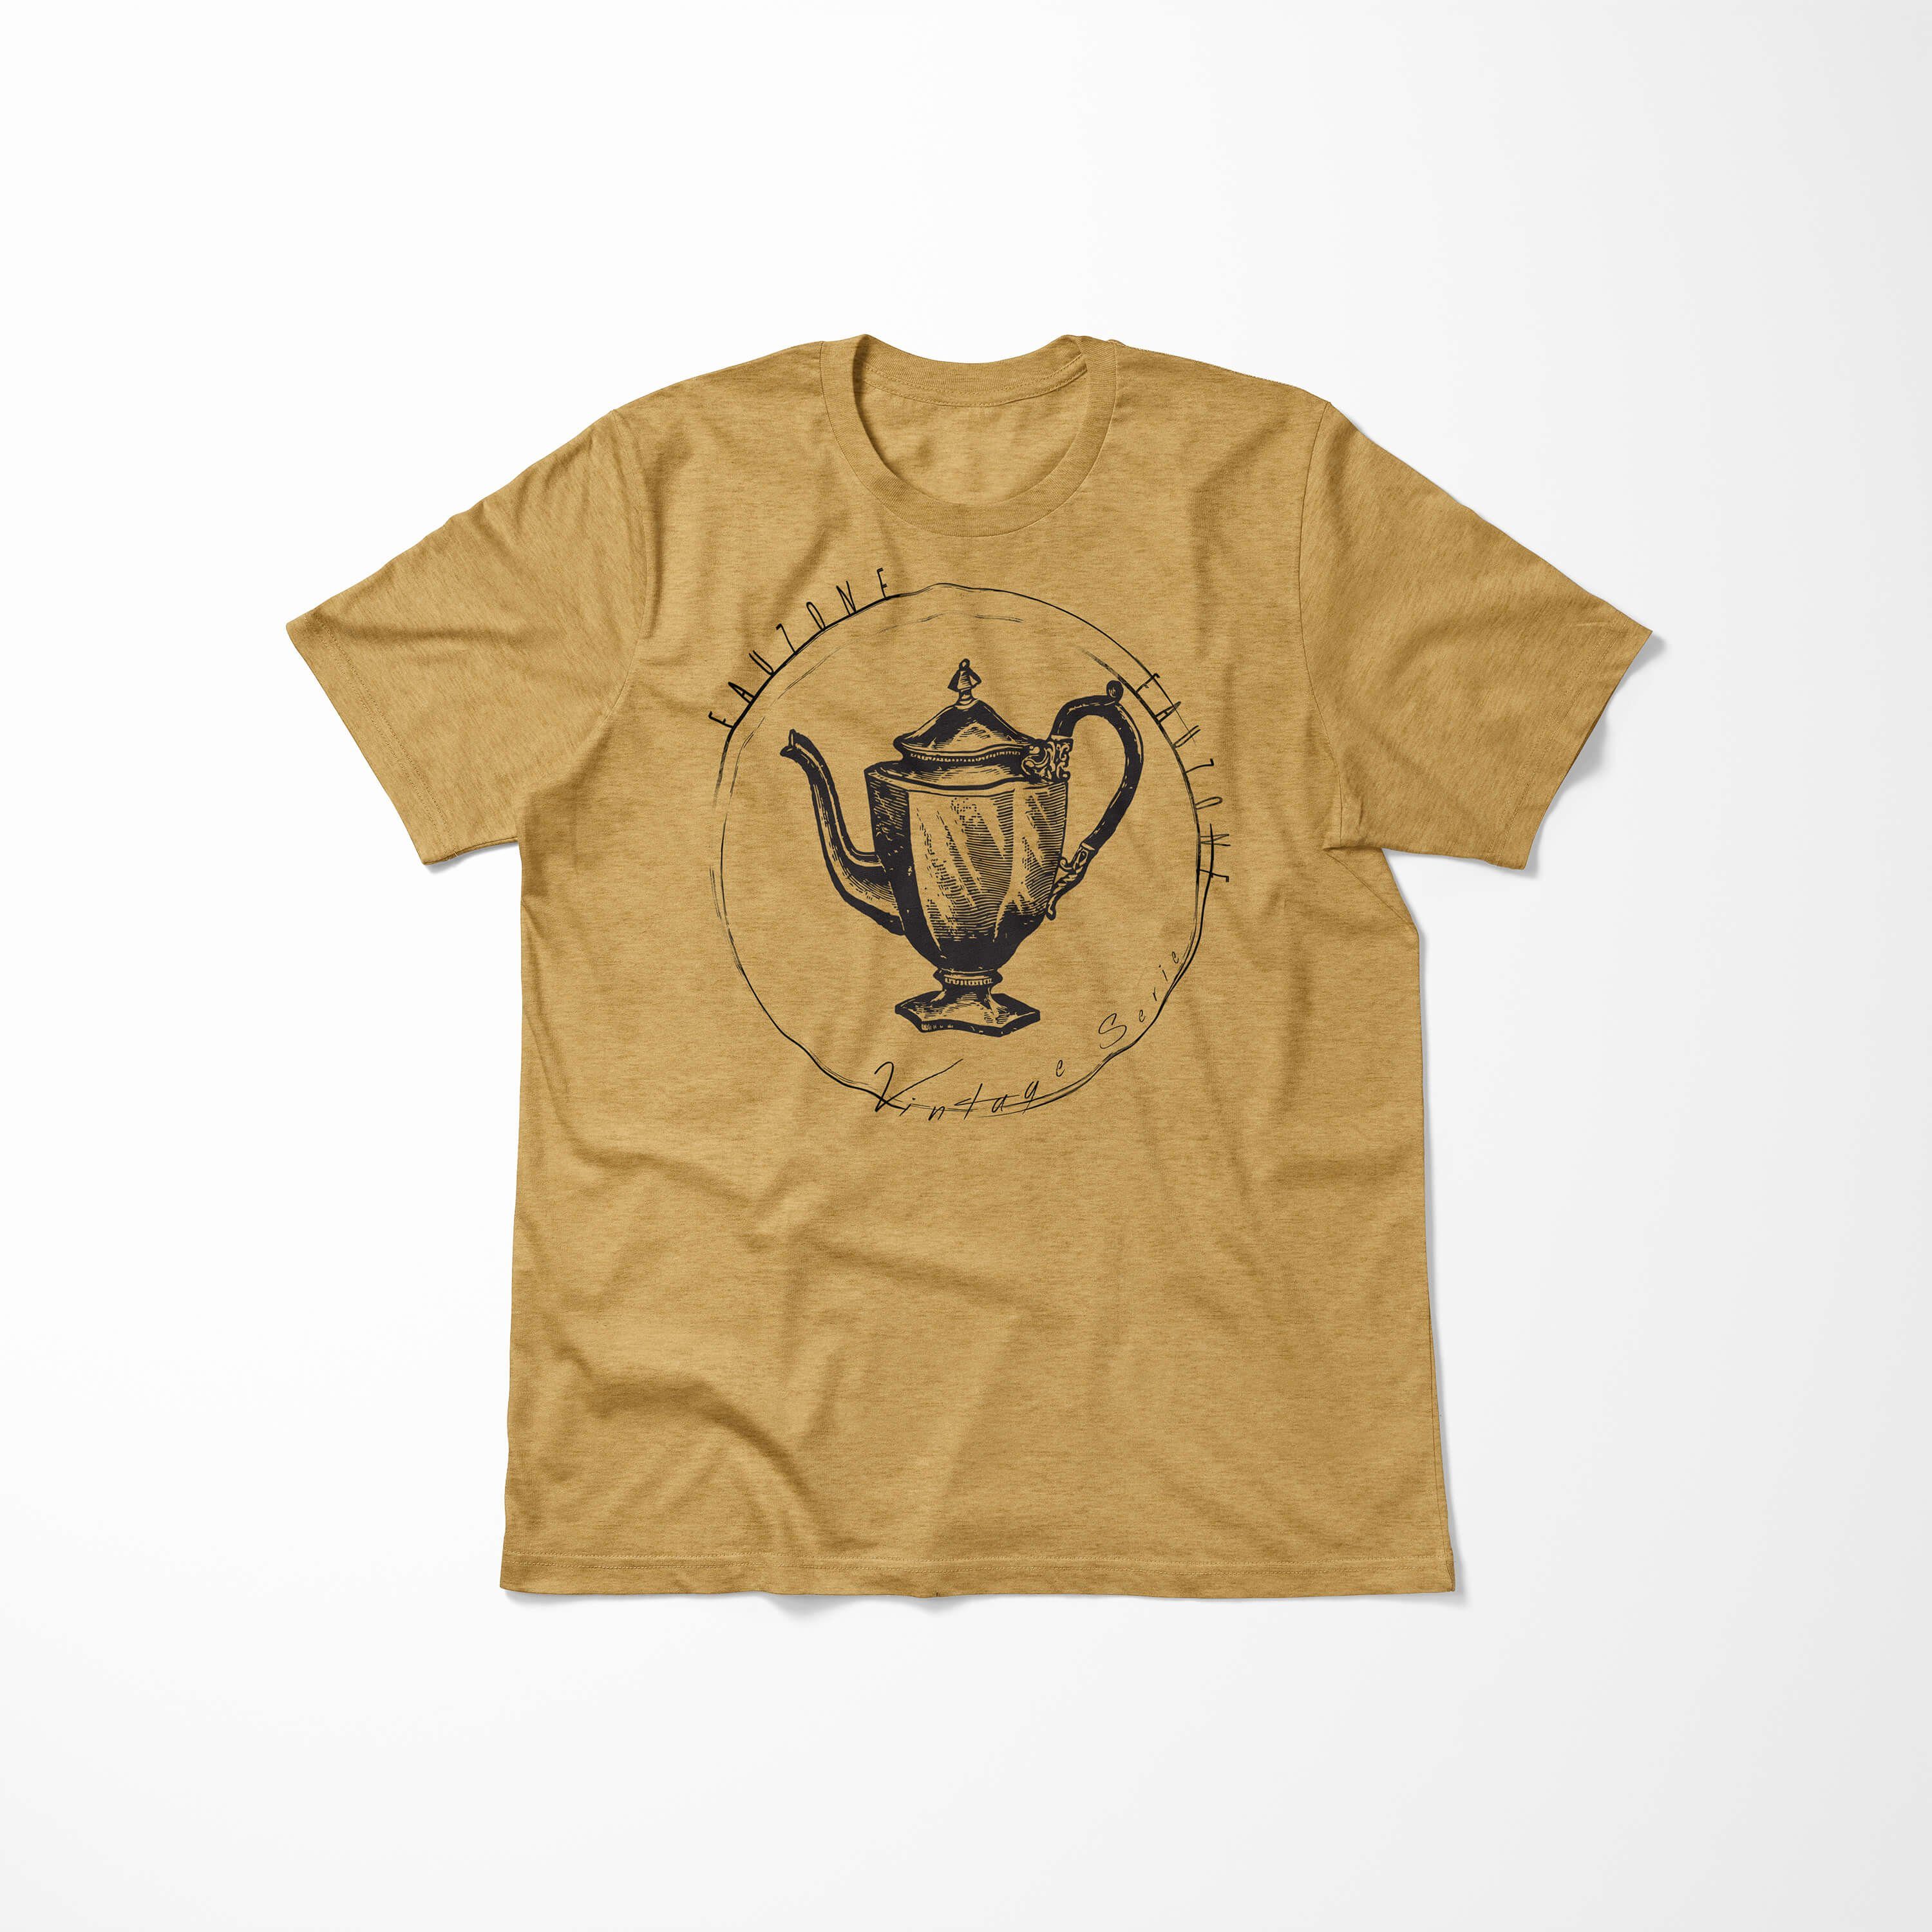 Sinus Art T-Shirt Vintage Gold T-Shirt Herren Antique Teekanne